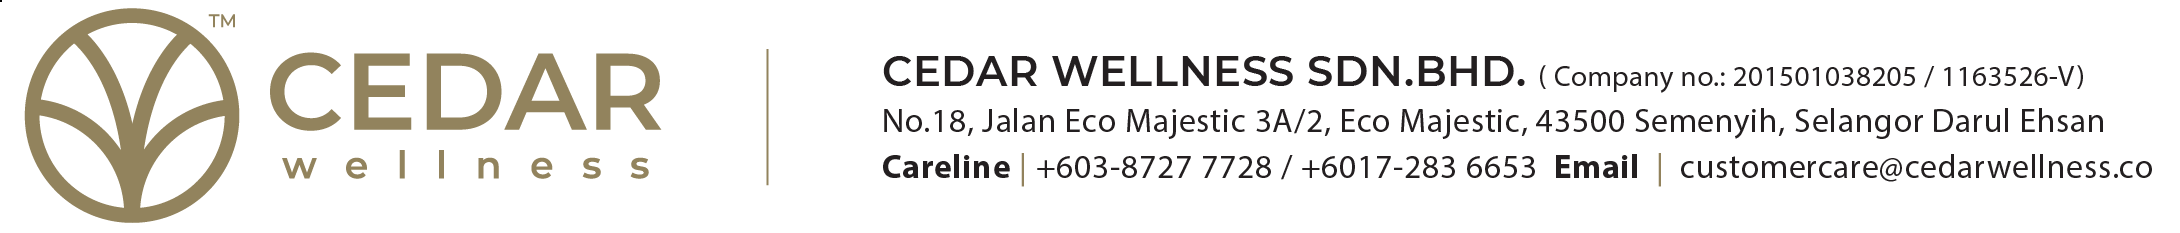 Cedar Wellness Sdn. Bhd. ROC: 201501038205 (1163526-V) Cedar Wellness